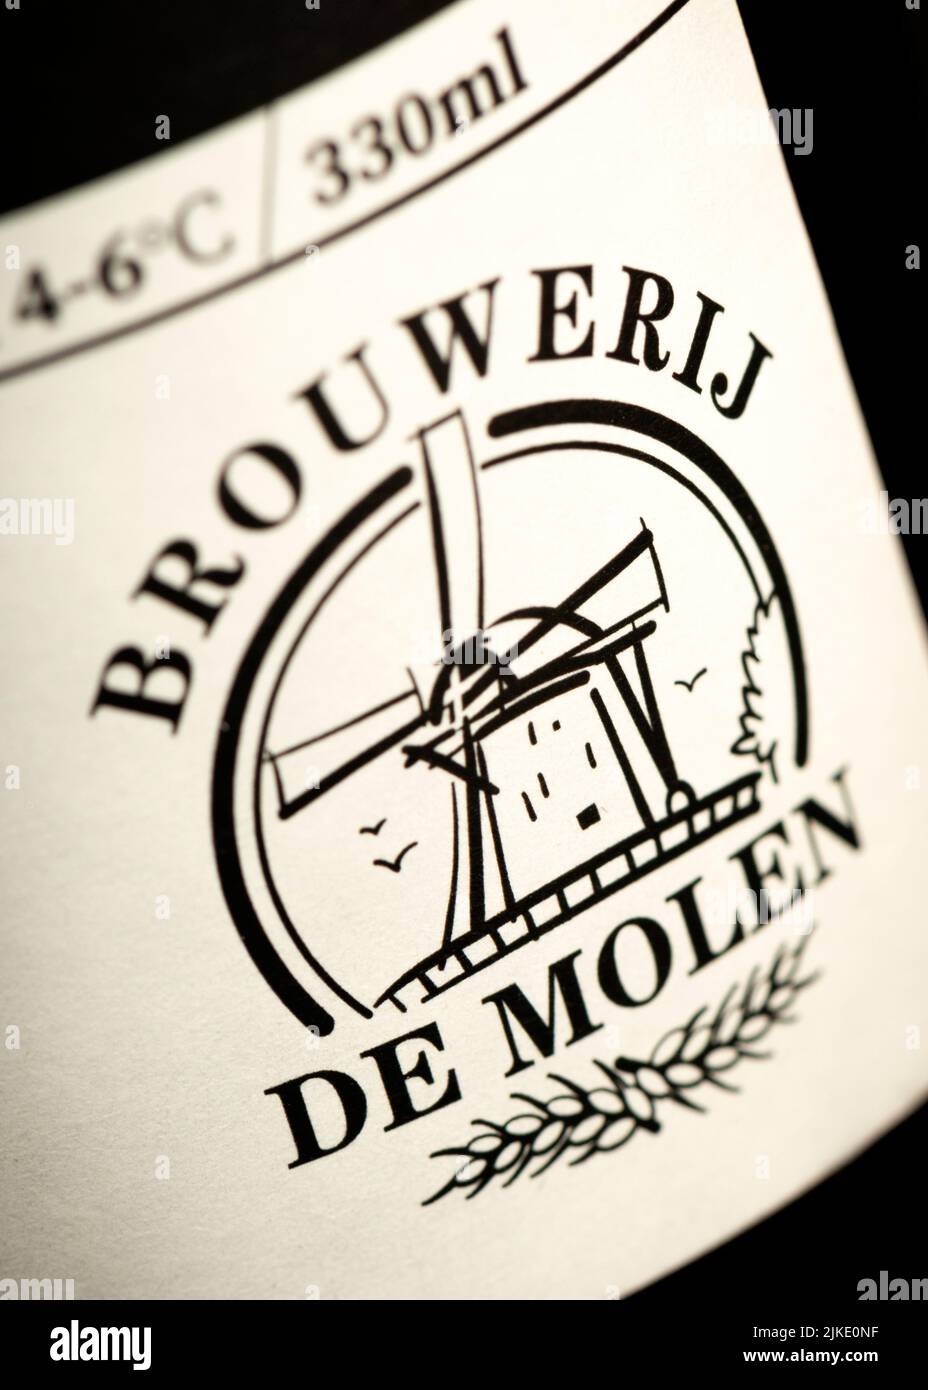 Brouwerij de Molen brewery logo on bottle label close up detail Stock Photo